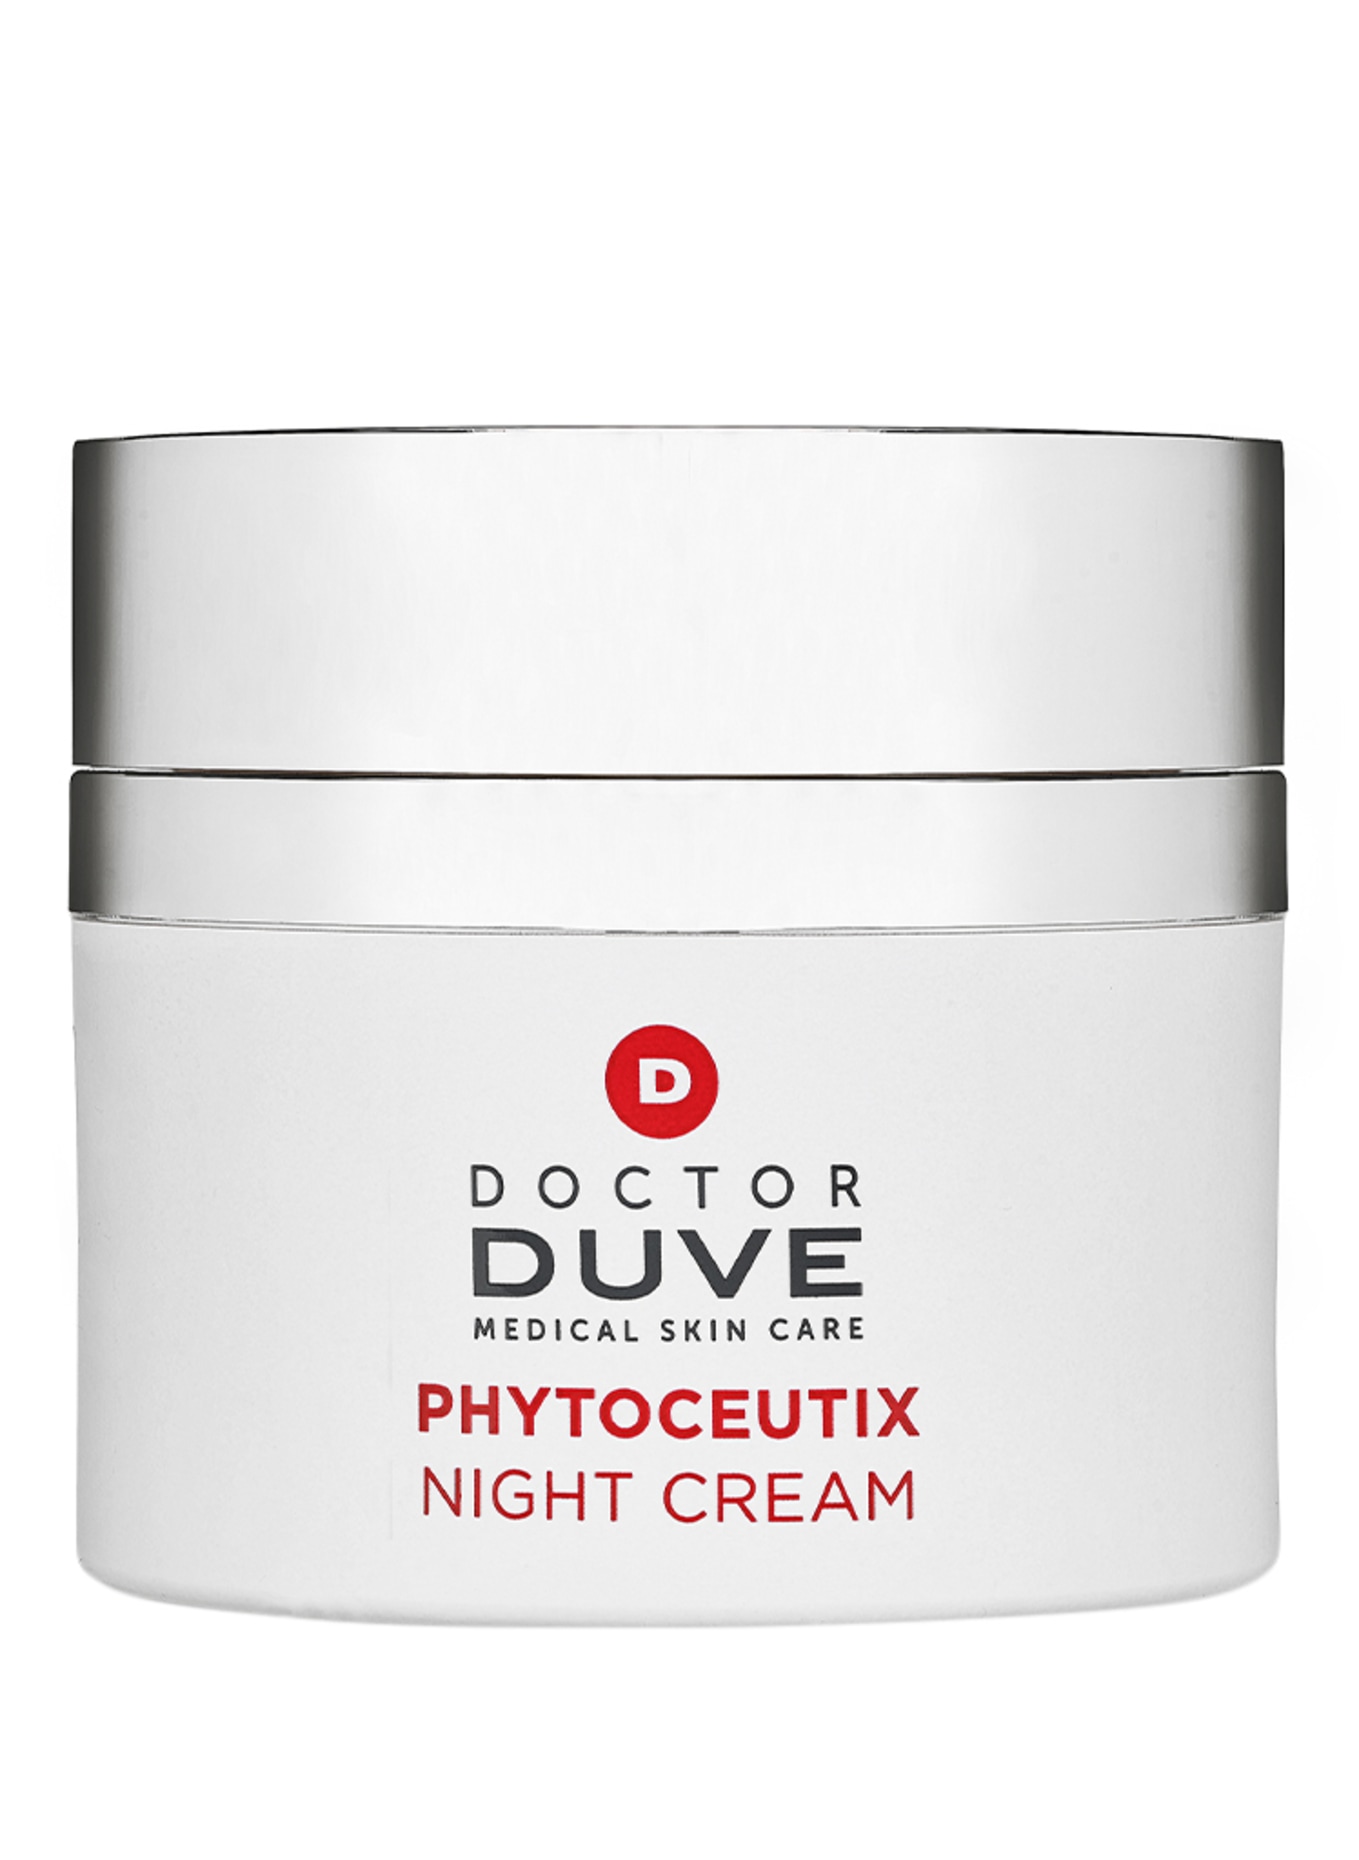 DOCTOR DUVE PHYTOCEUTIX NIGHT CREAM (Obrazek 1)